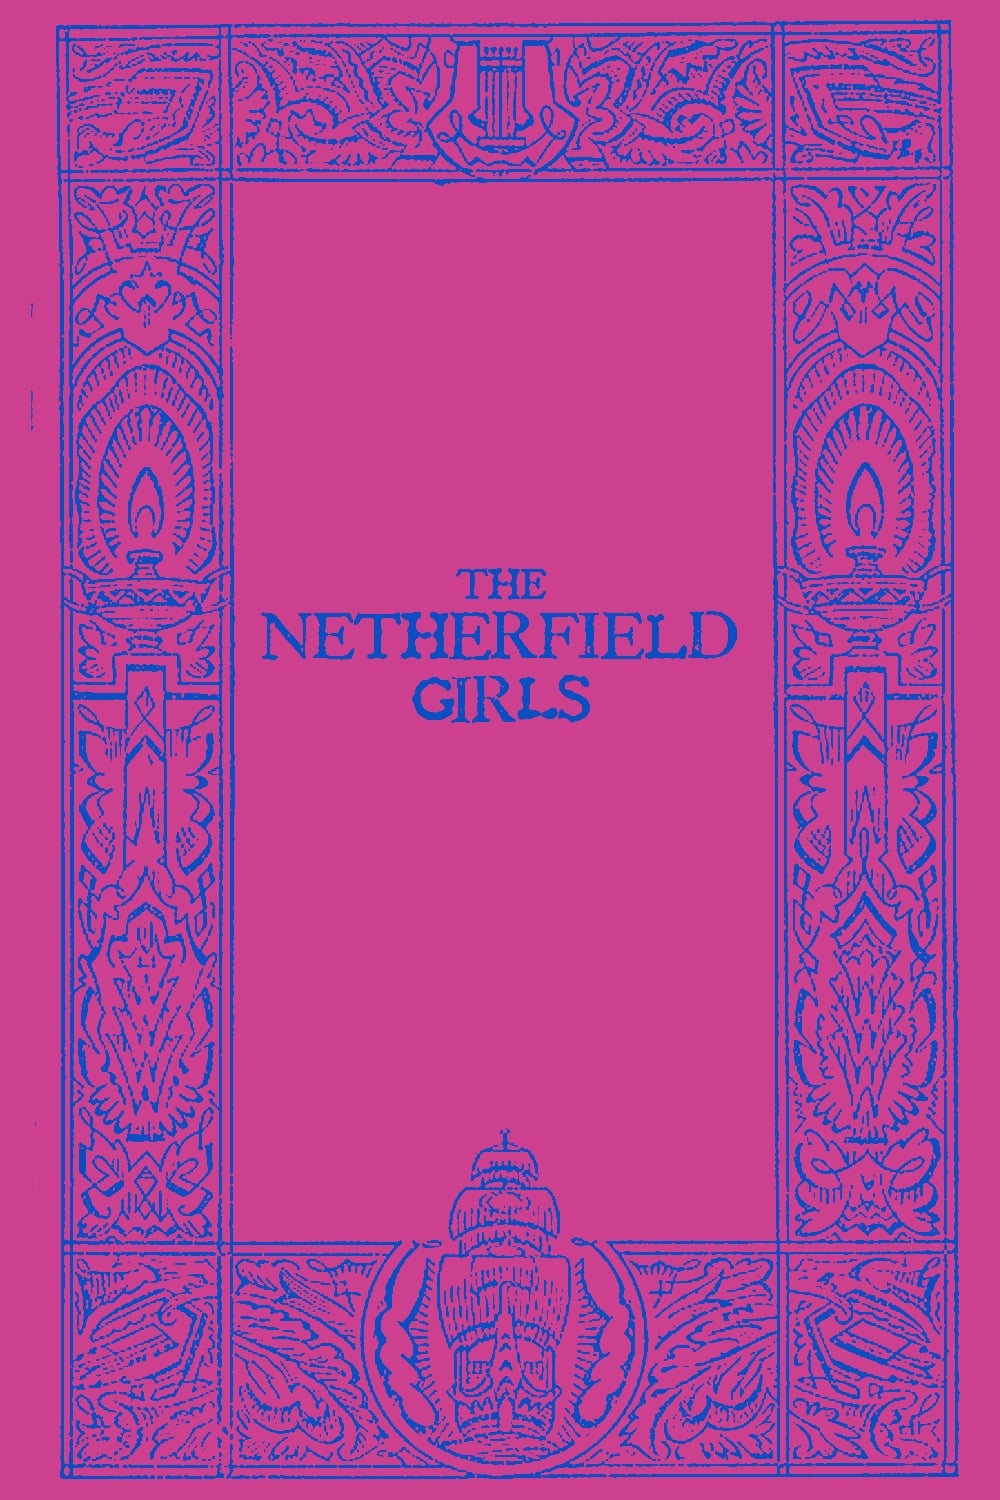 The Netherfield Girls